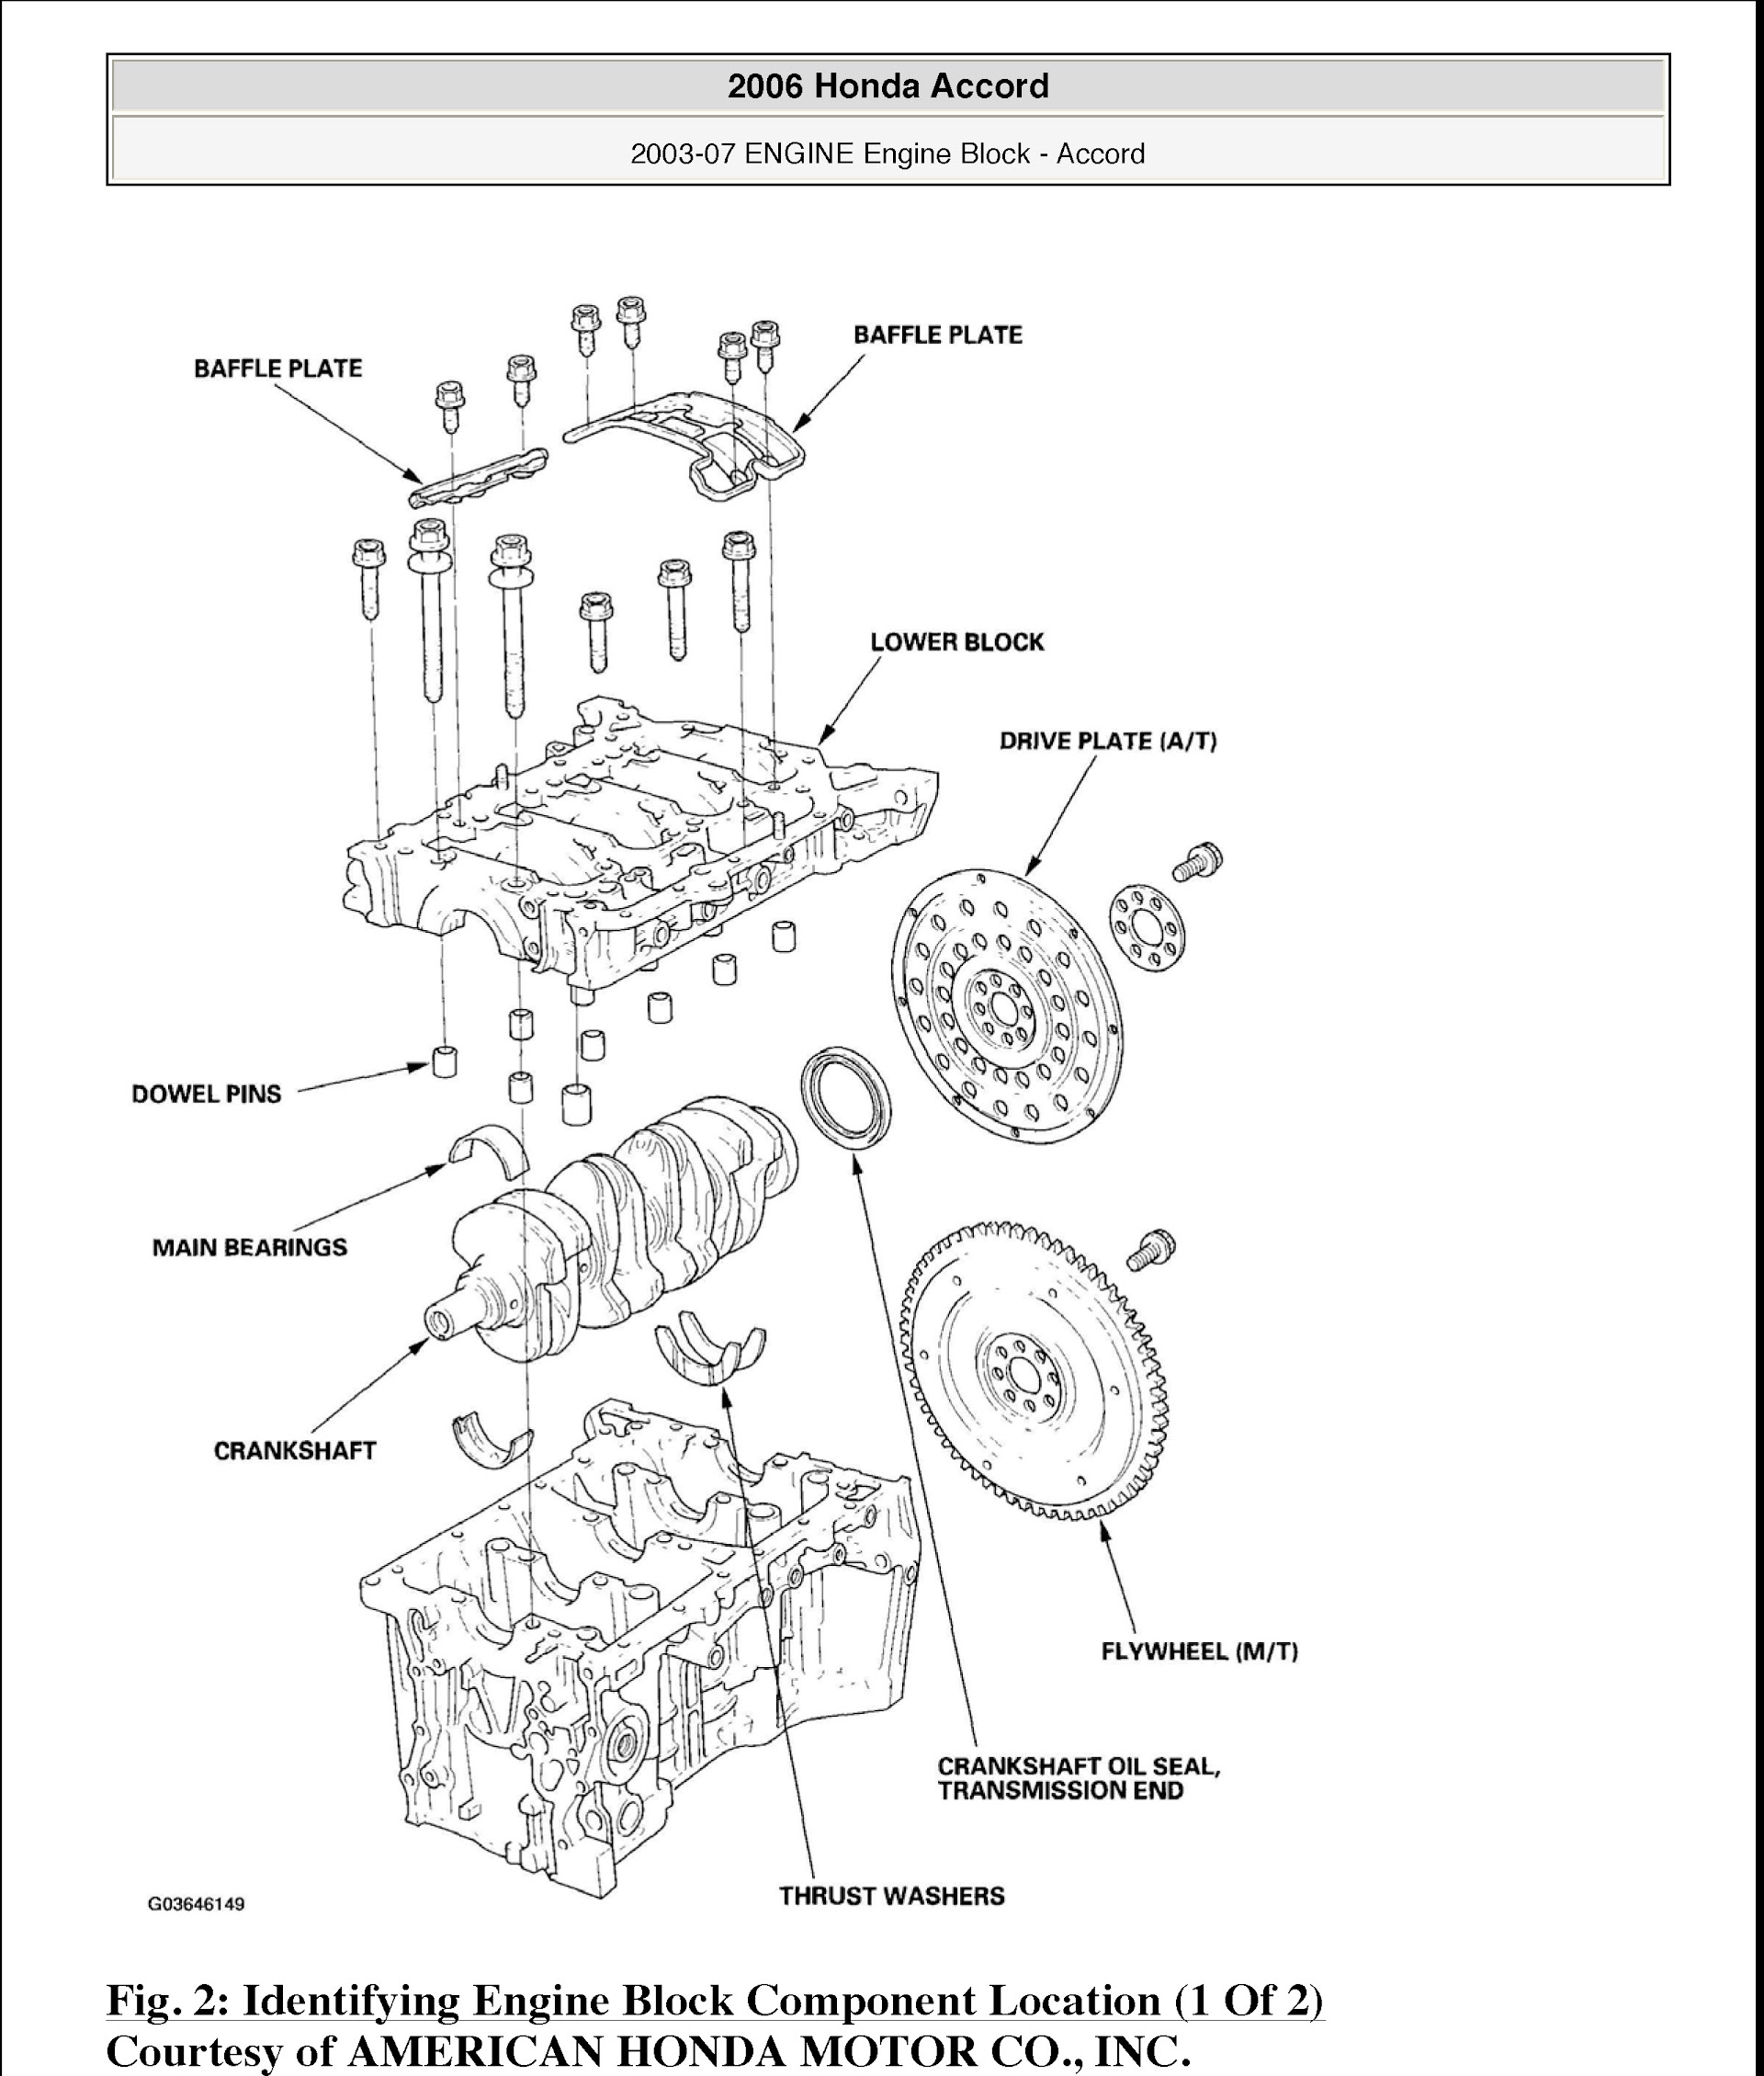 2007 Honda Accord Repair Manual, Engine Block